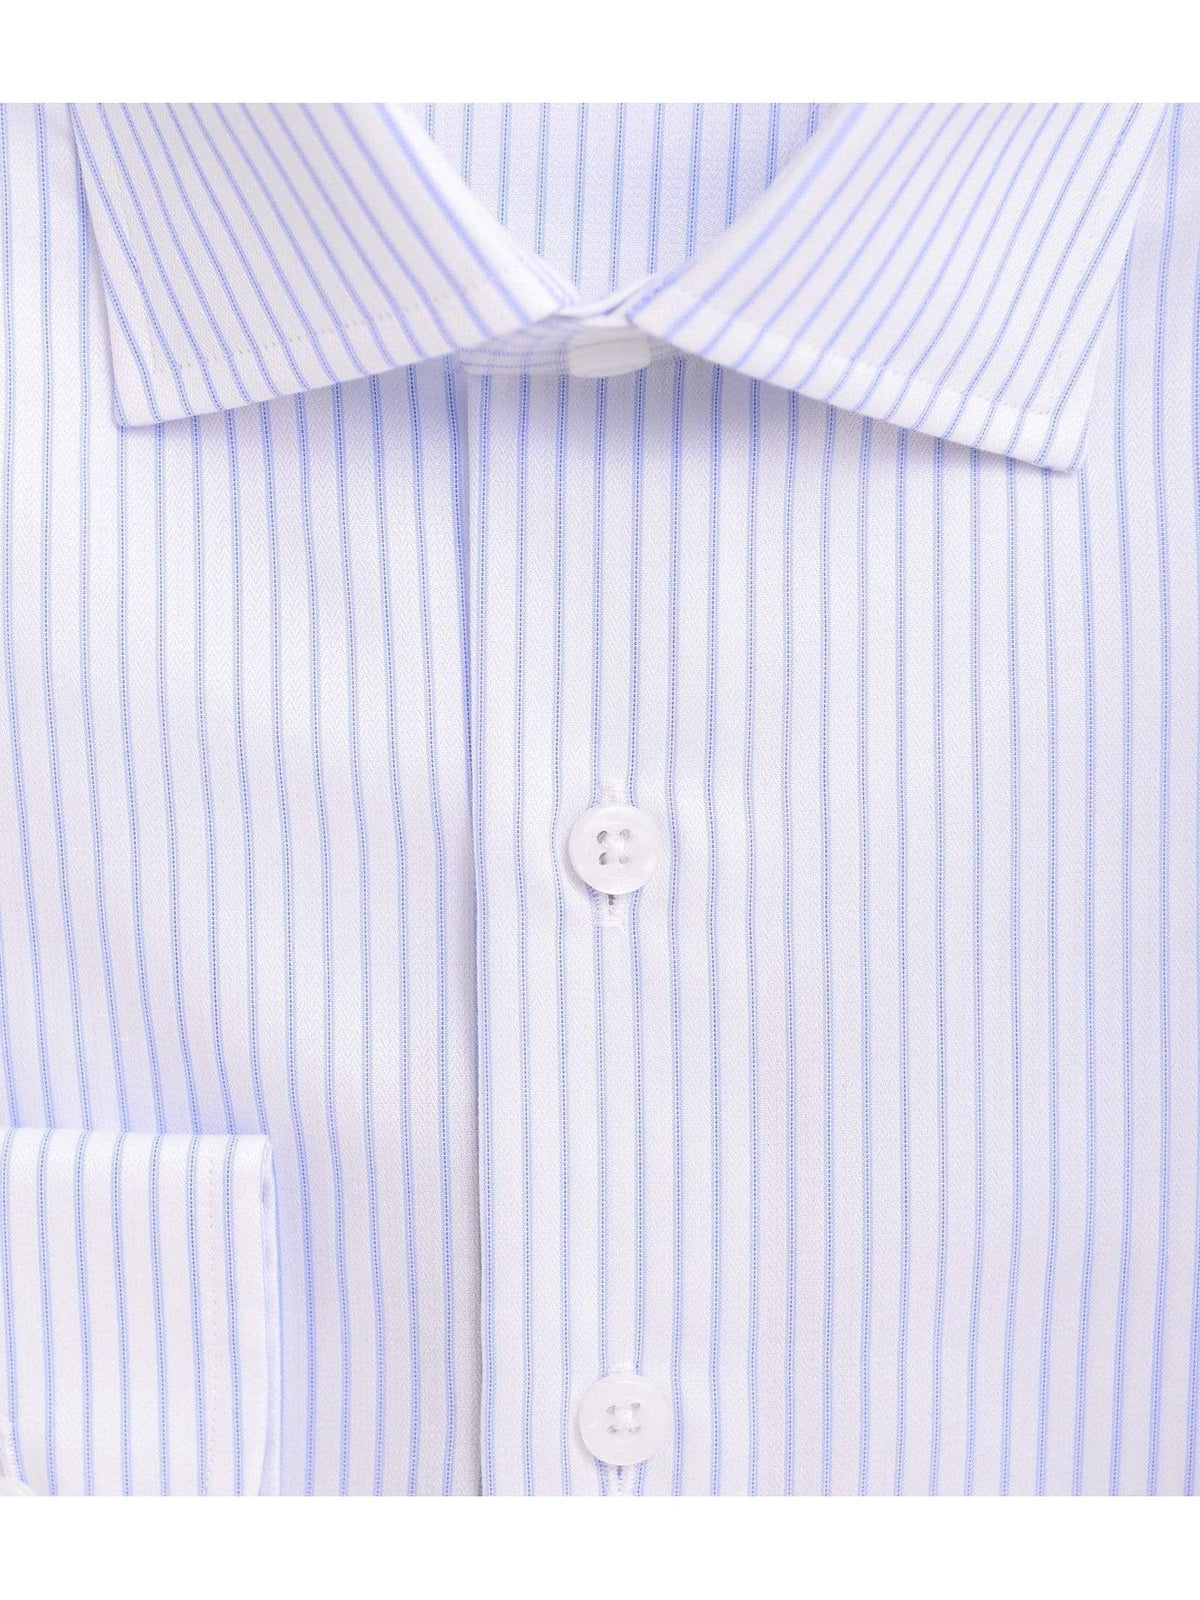 Proper Shirtings SHIRTS Mens Slim Fit Blue Striped Spread Collar 100 2 Ply Cotton Dress Shirt